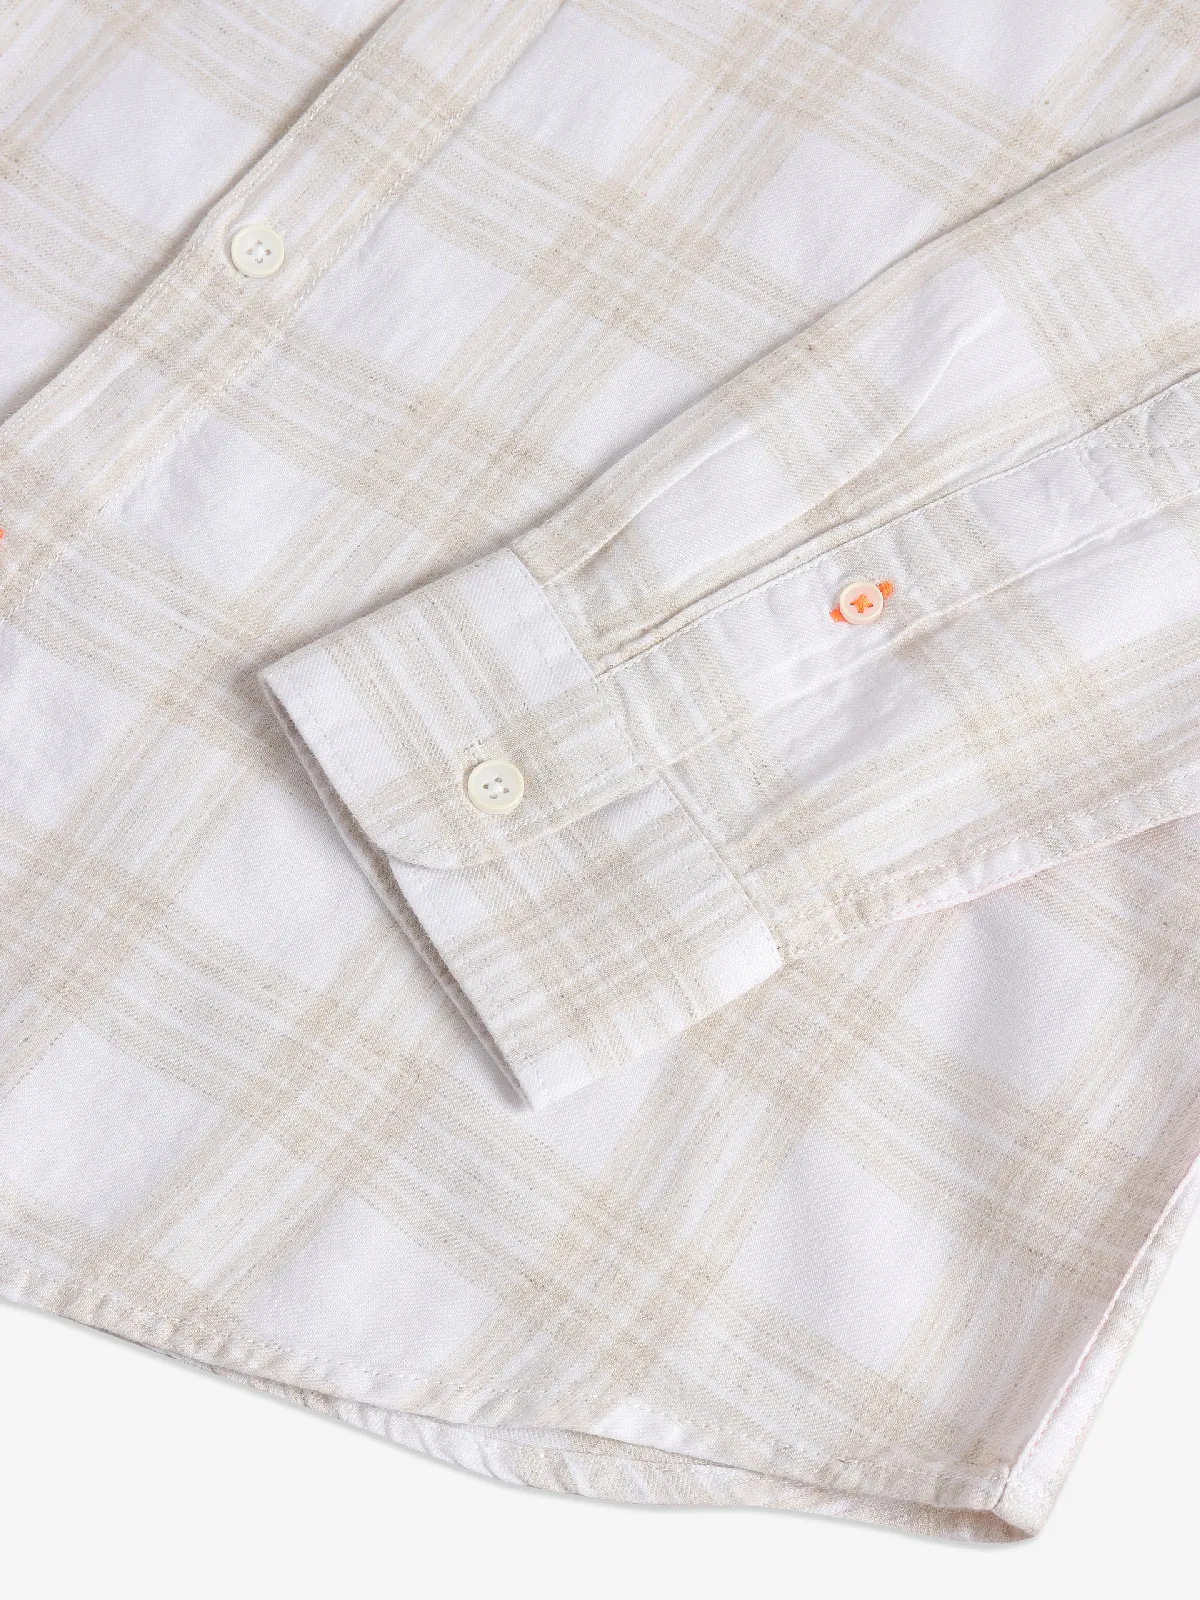 Spykar cream cotton checks shirt